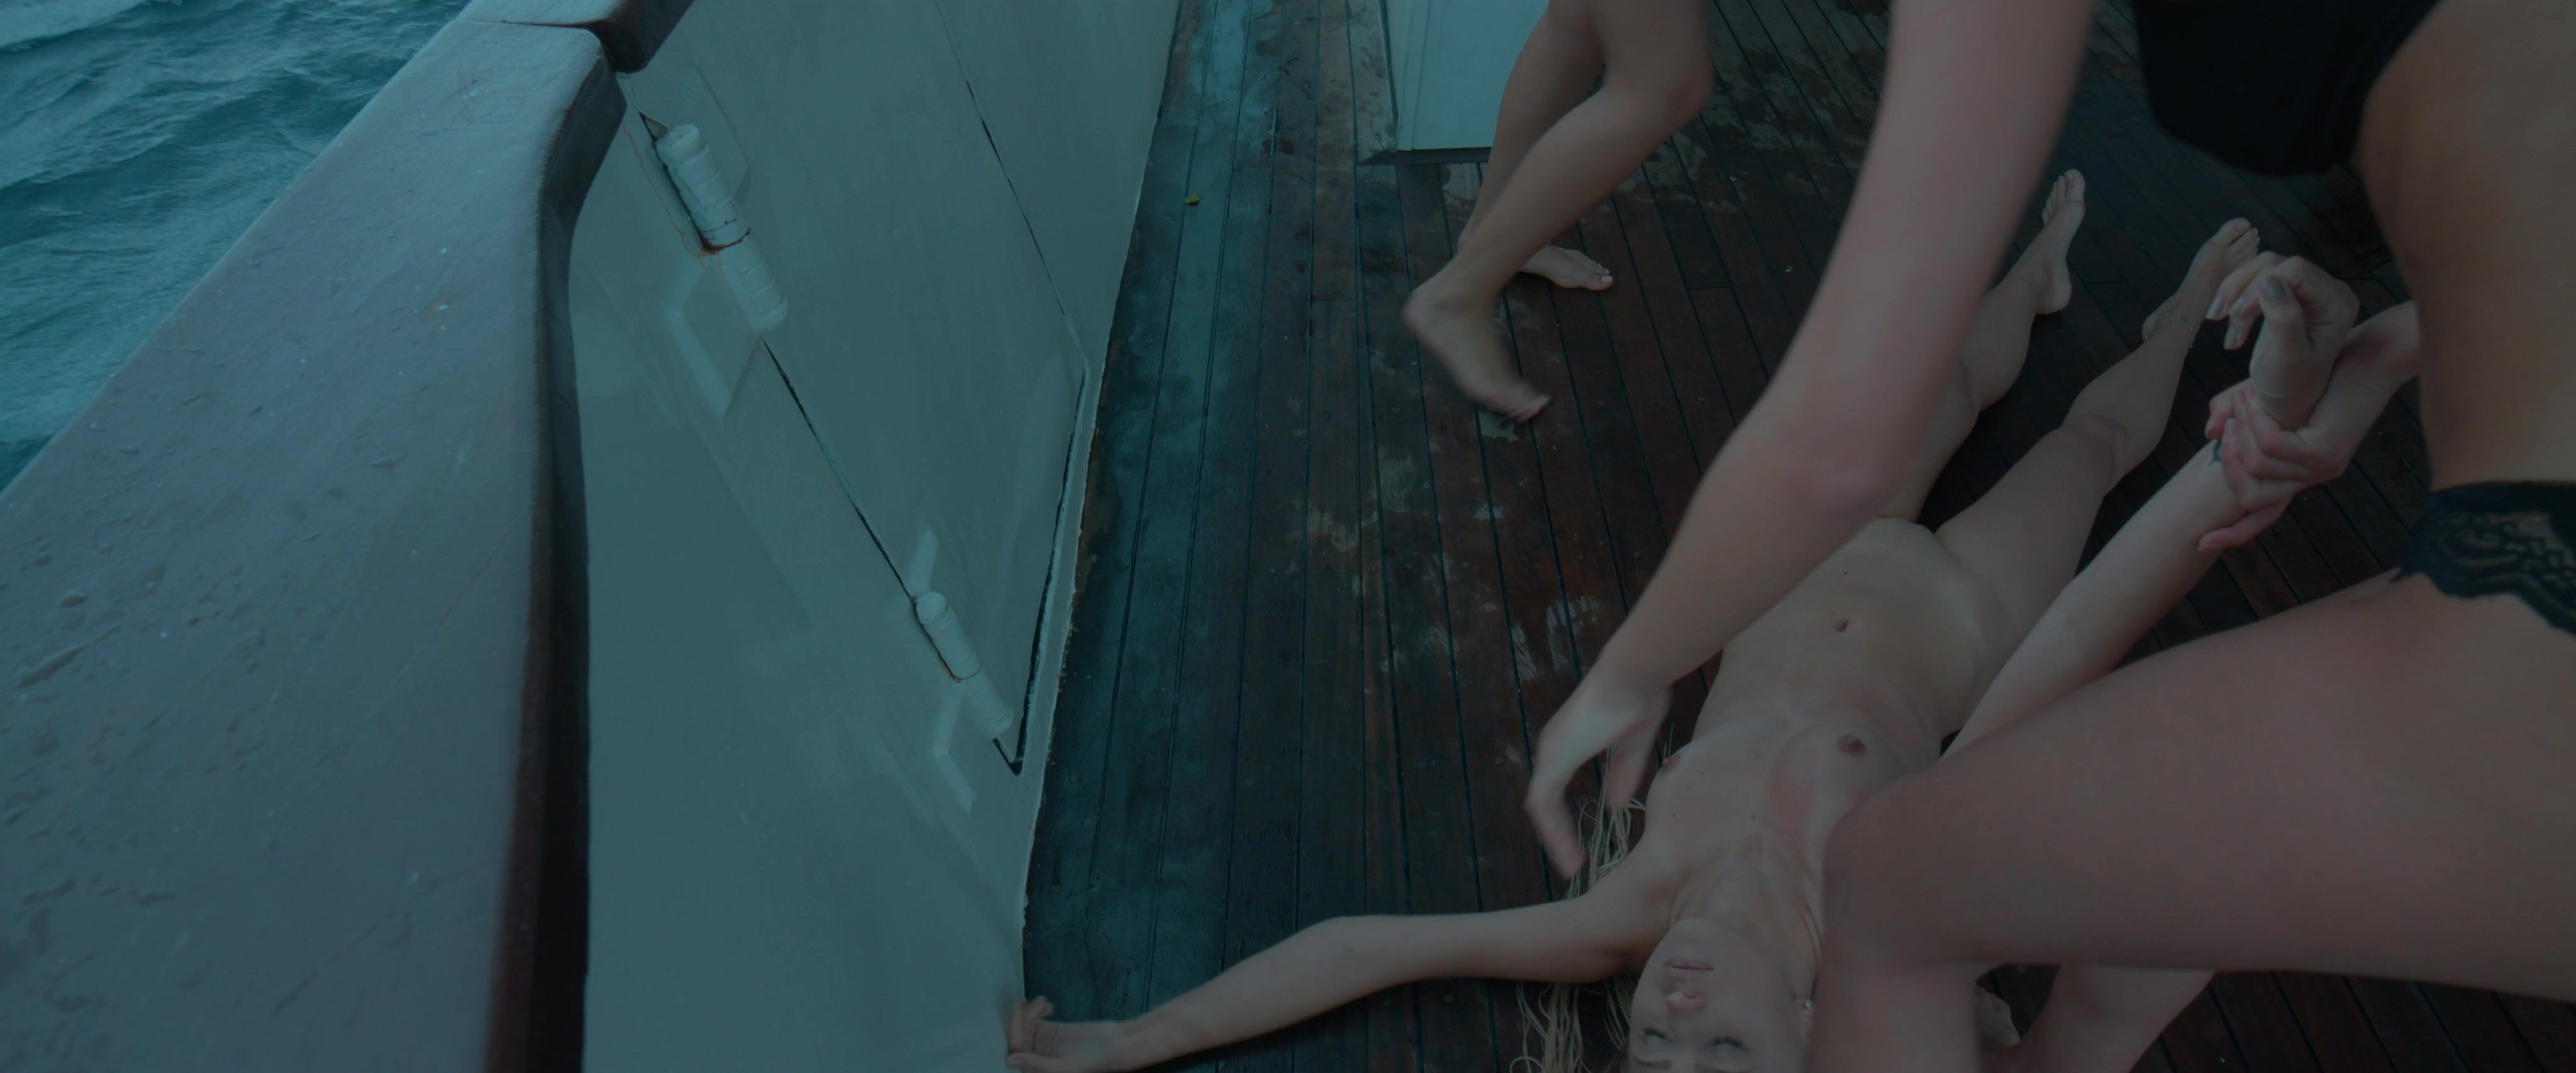 Amateurs Gone Nude Art Movie - Hallway (Best Erotic Music) SecretShows